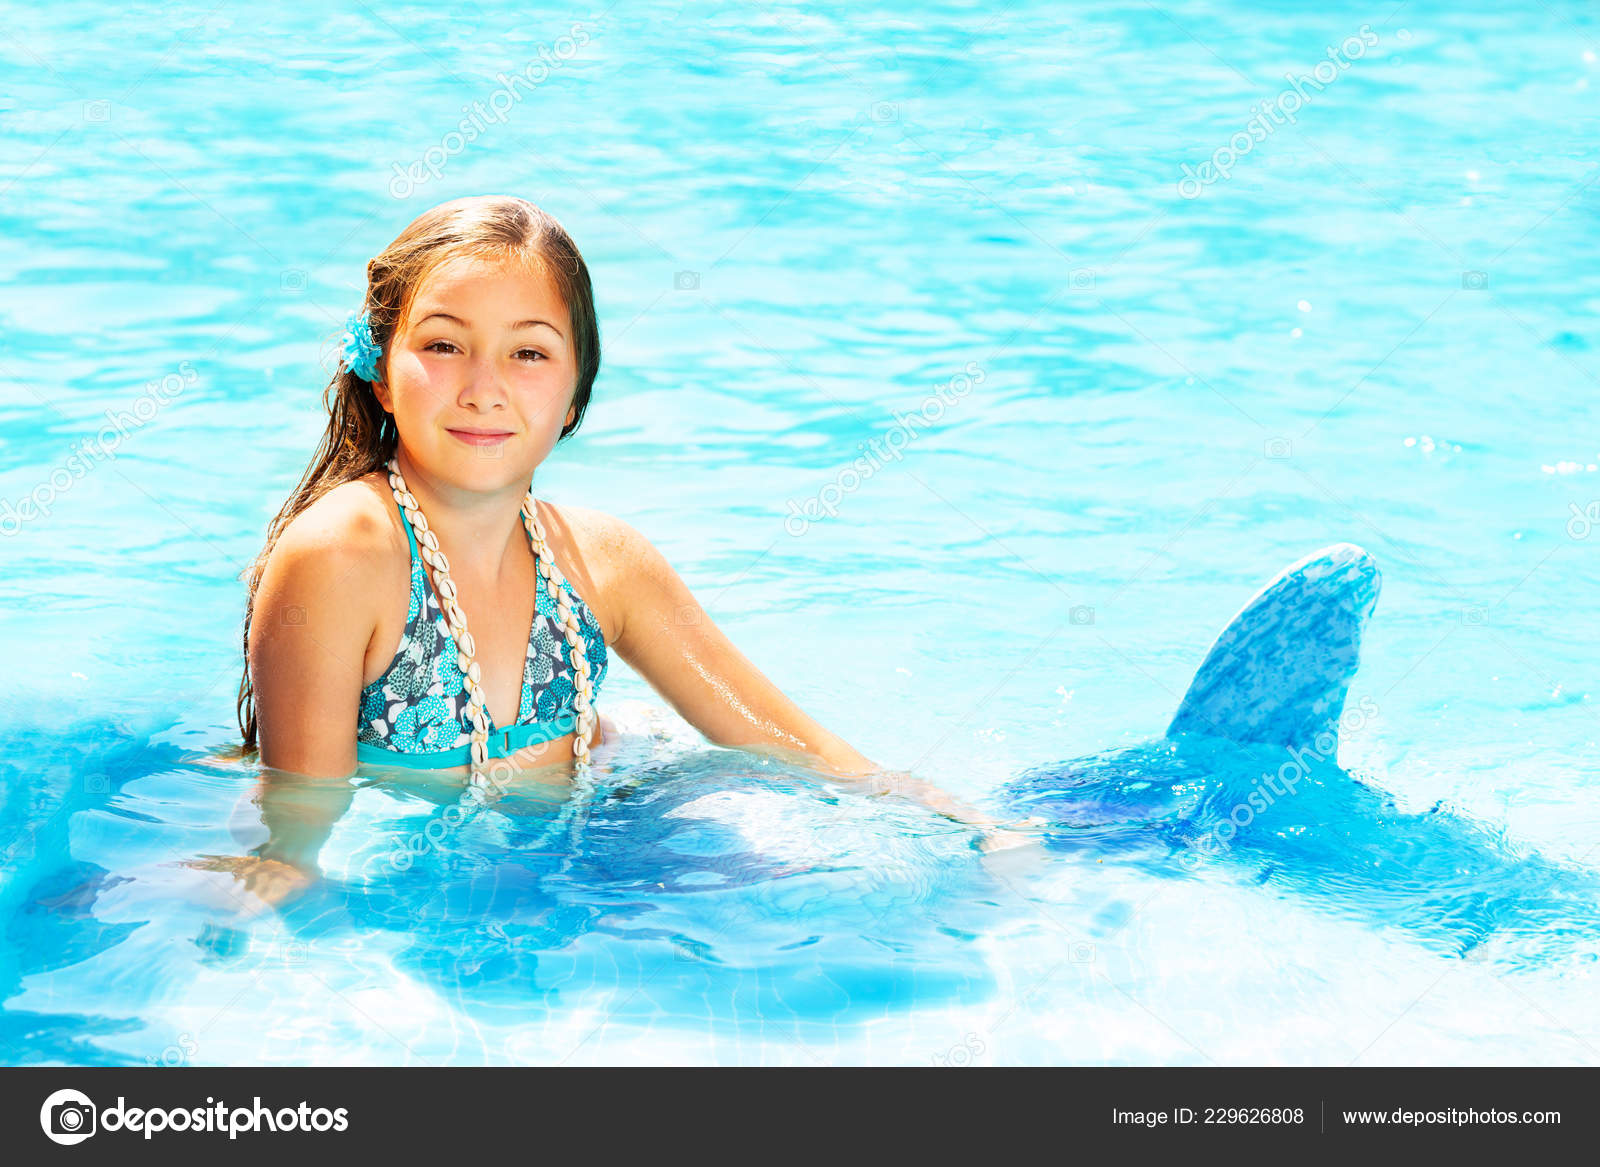 https://st4.depositphotos.com/1018611/22962/i/1600/depositphotos_229626808-stock-photo-portrait-beautiful-teenage-girl-mermaid.jpg